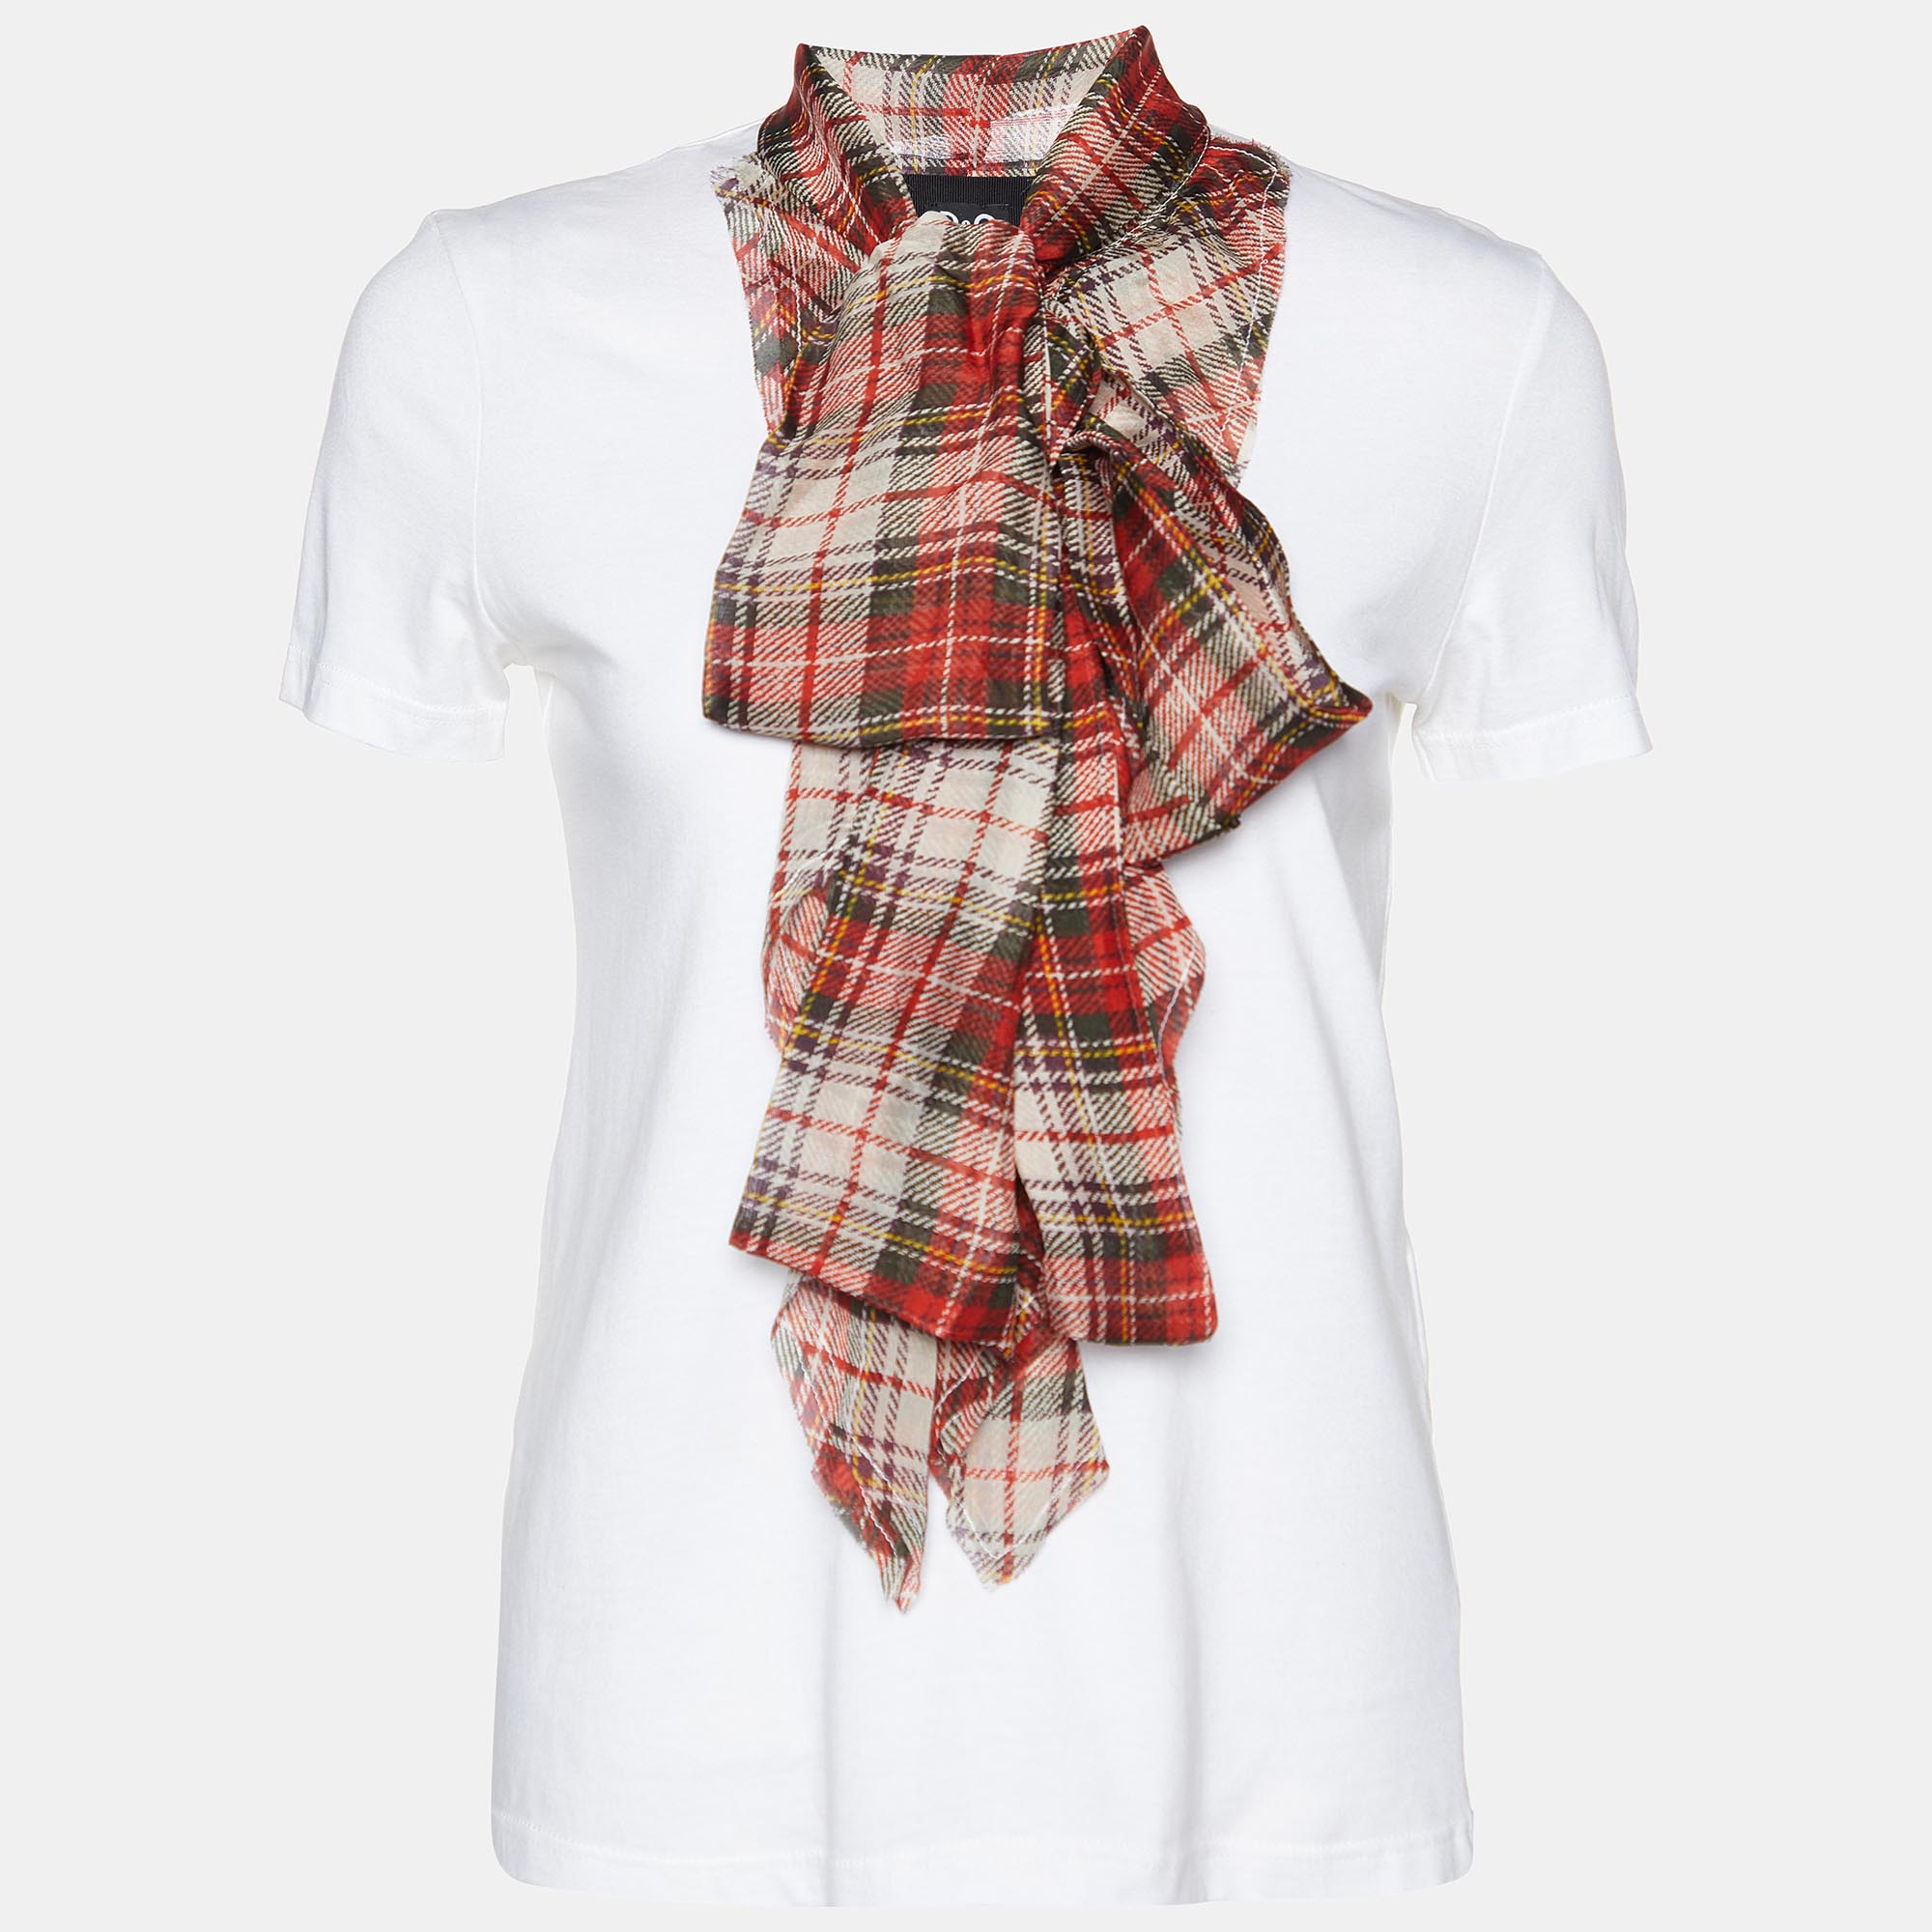 D&g white silk scarf trim cotton buttoned t-shirt s